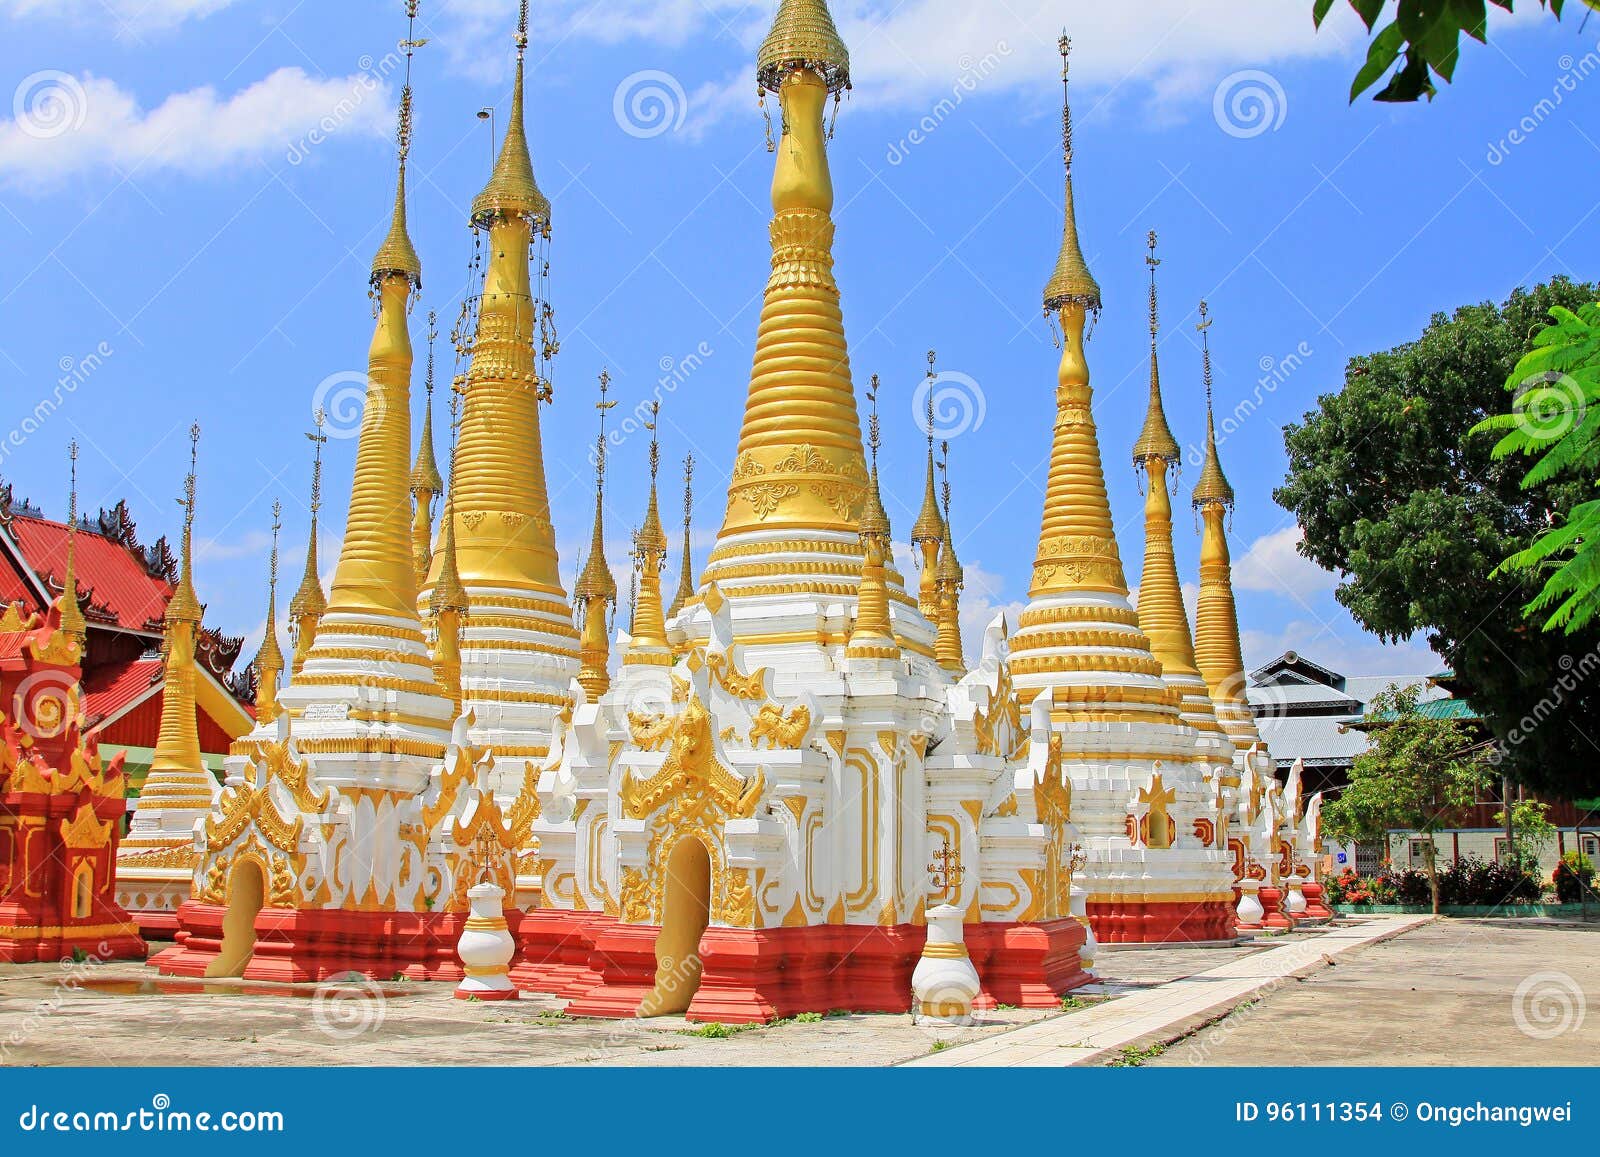 kyauk phyu gyi pagoda, nyaungshwe, myanmar